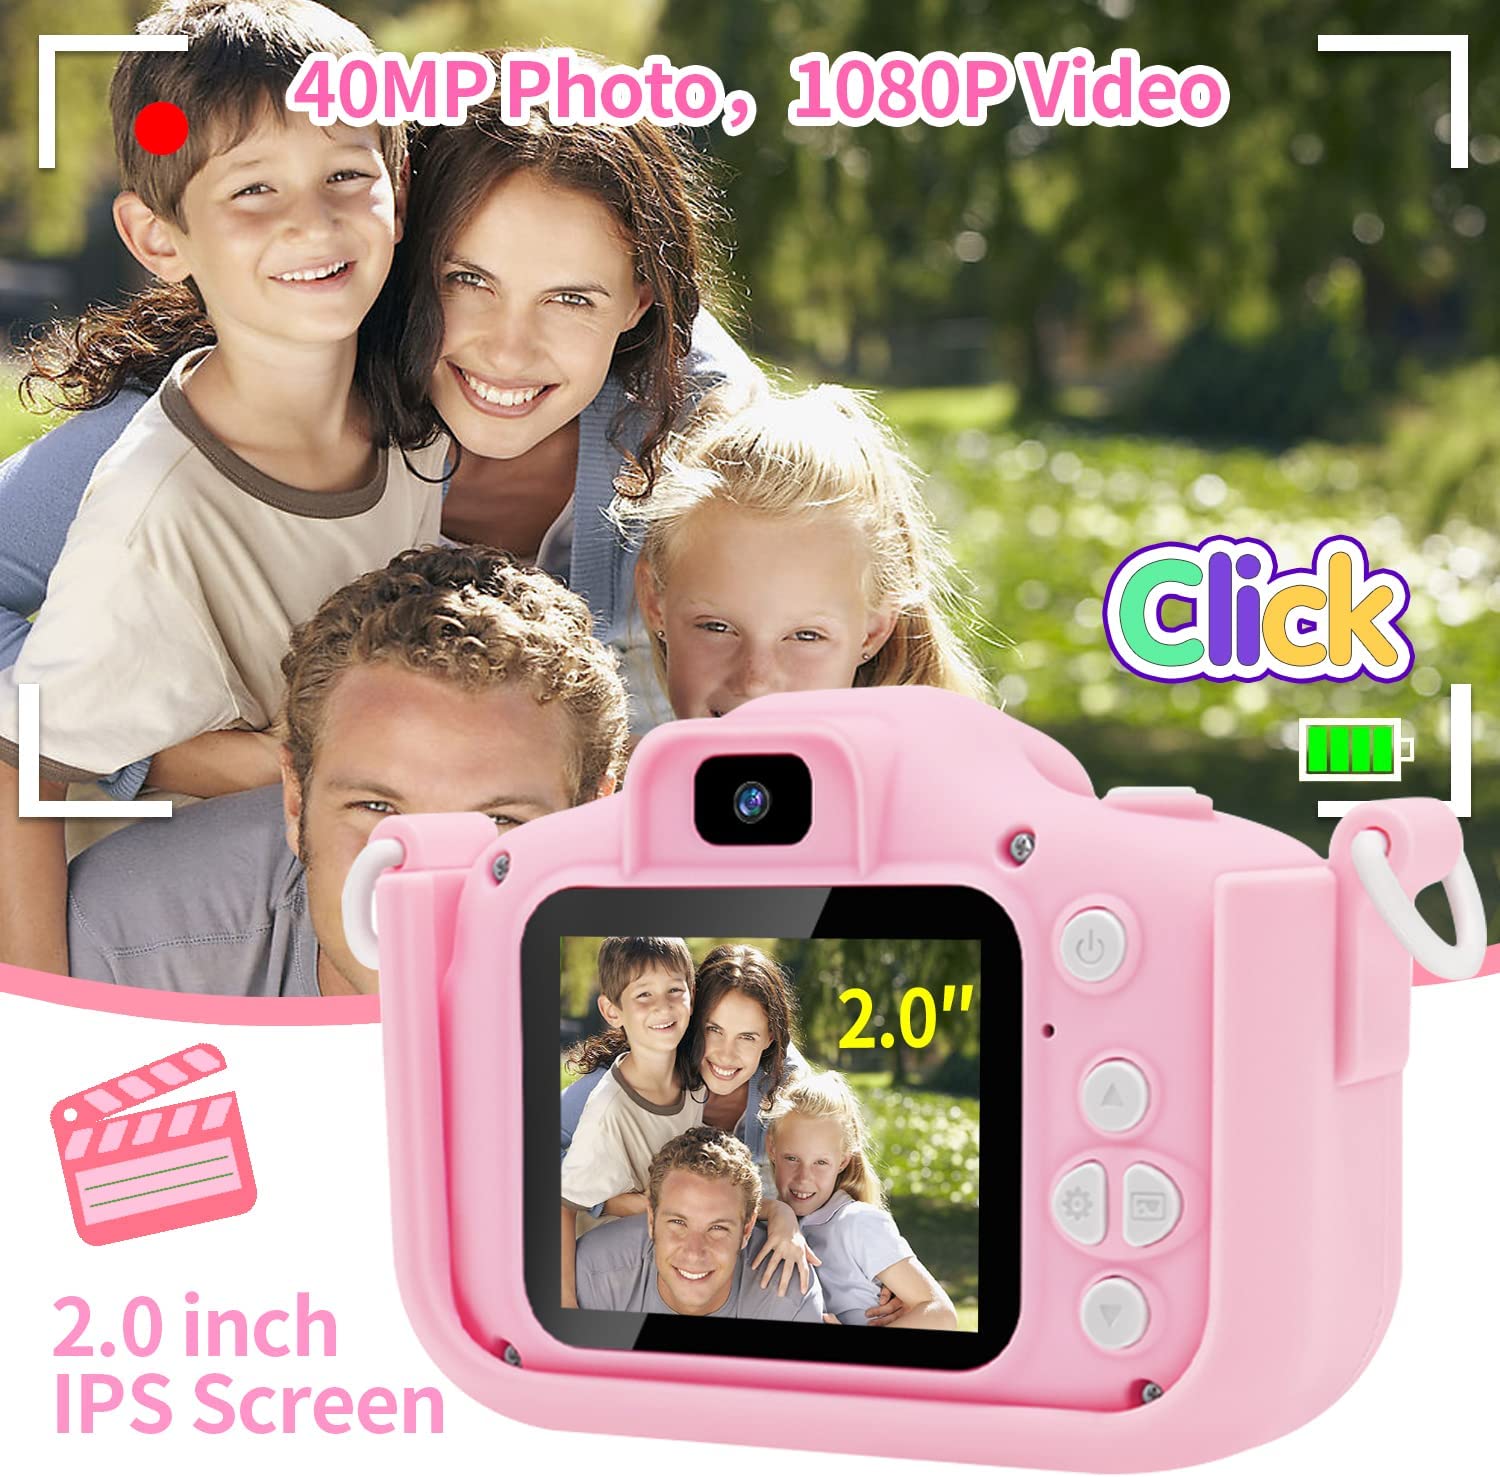 Digital-SLR-Cameras-DSLR-Digital-Cameras-1080P-HD-Children-Cameras-2-Inch-Screen-Dual-Lens-Kids-Camera-20MP-Selfie-Camera-with-32-GB-Card-Birthday-Holiday-Gifts-for-Kid-3-10Y-22